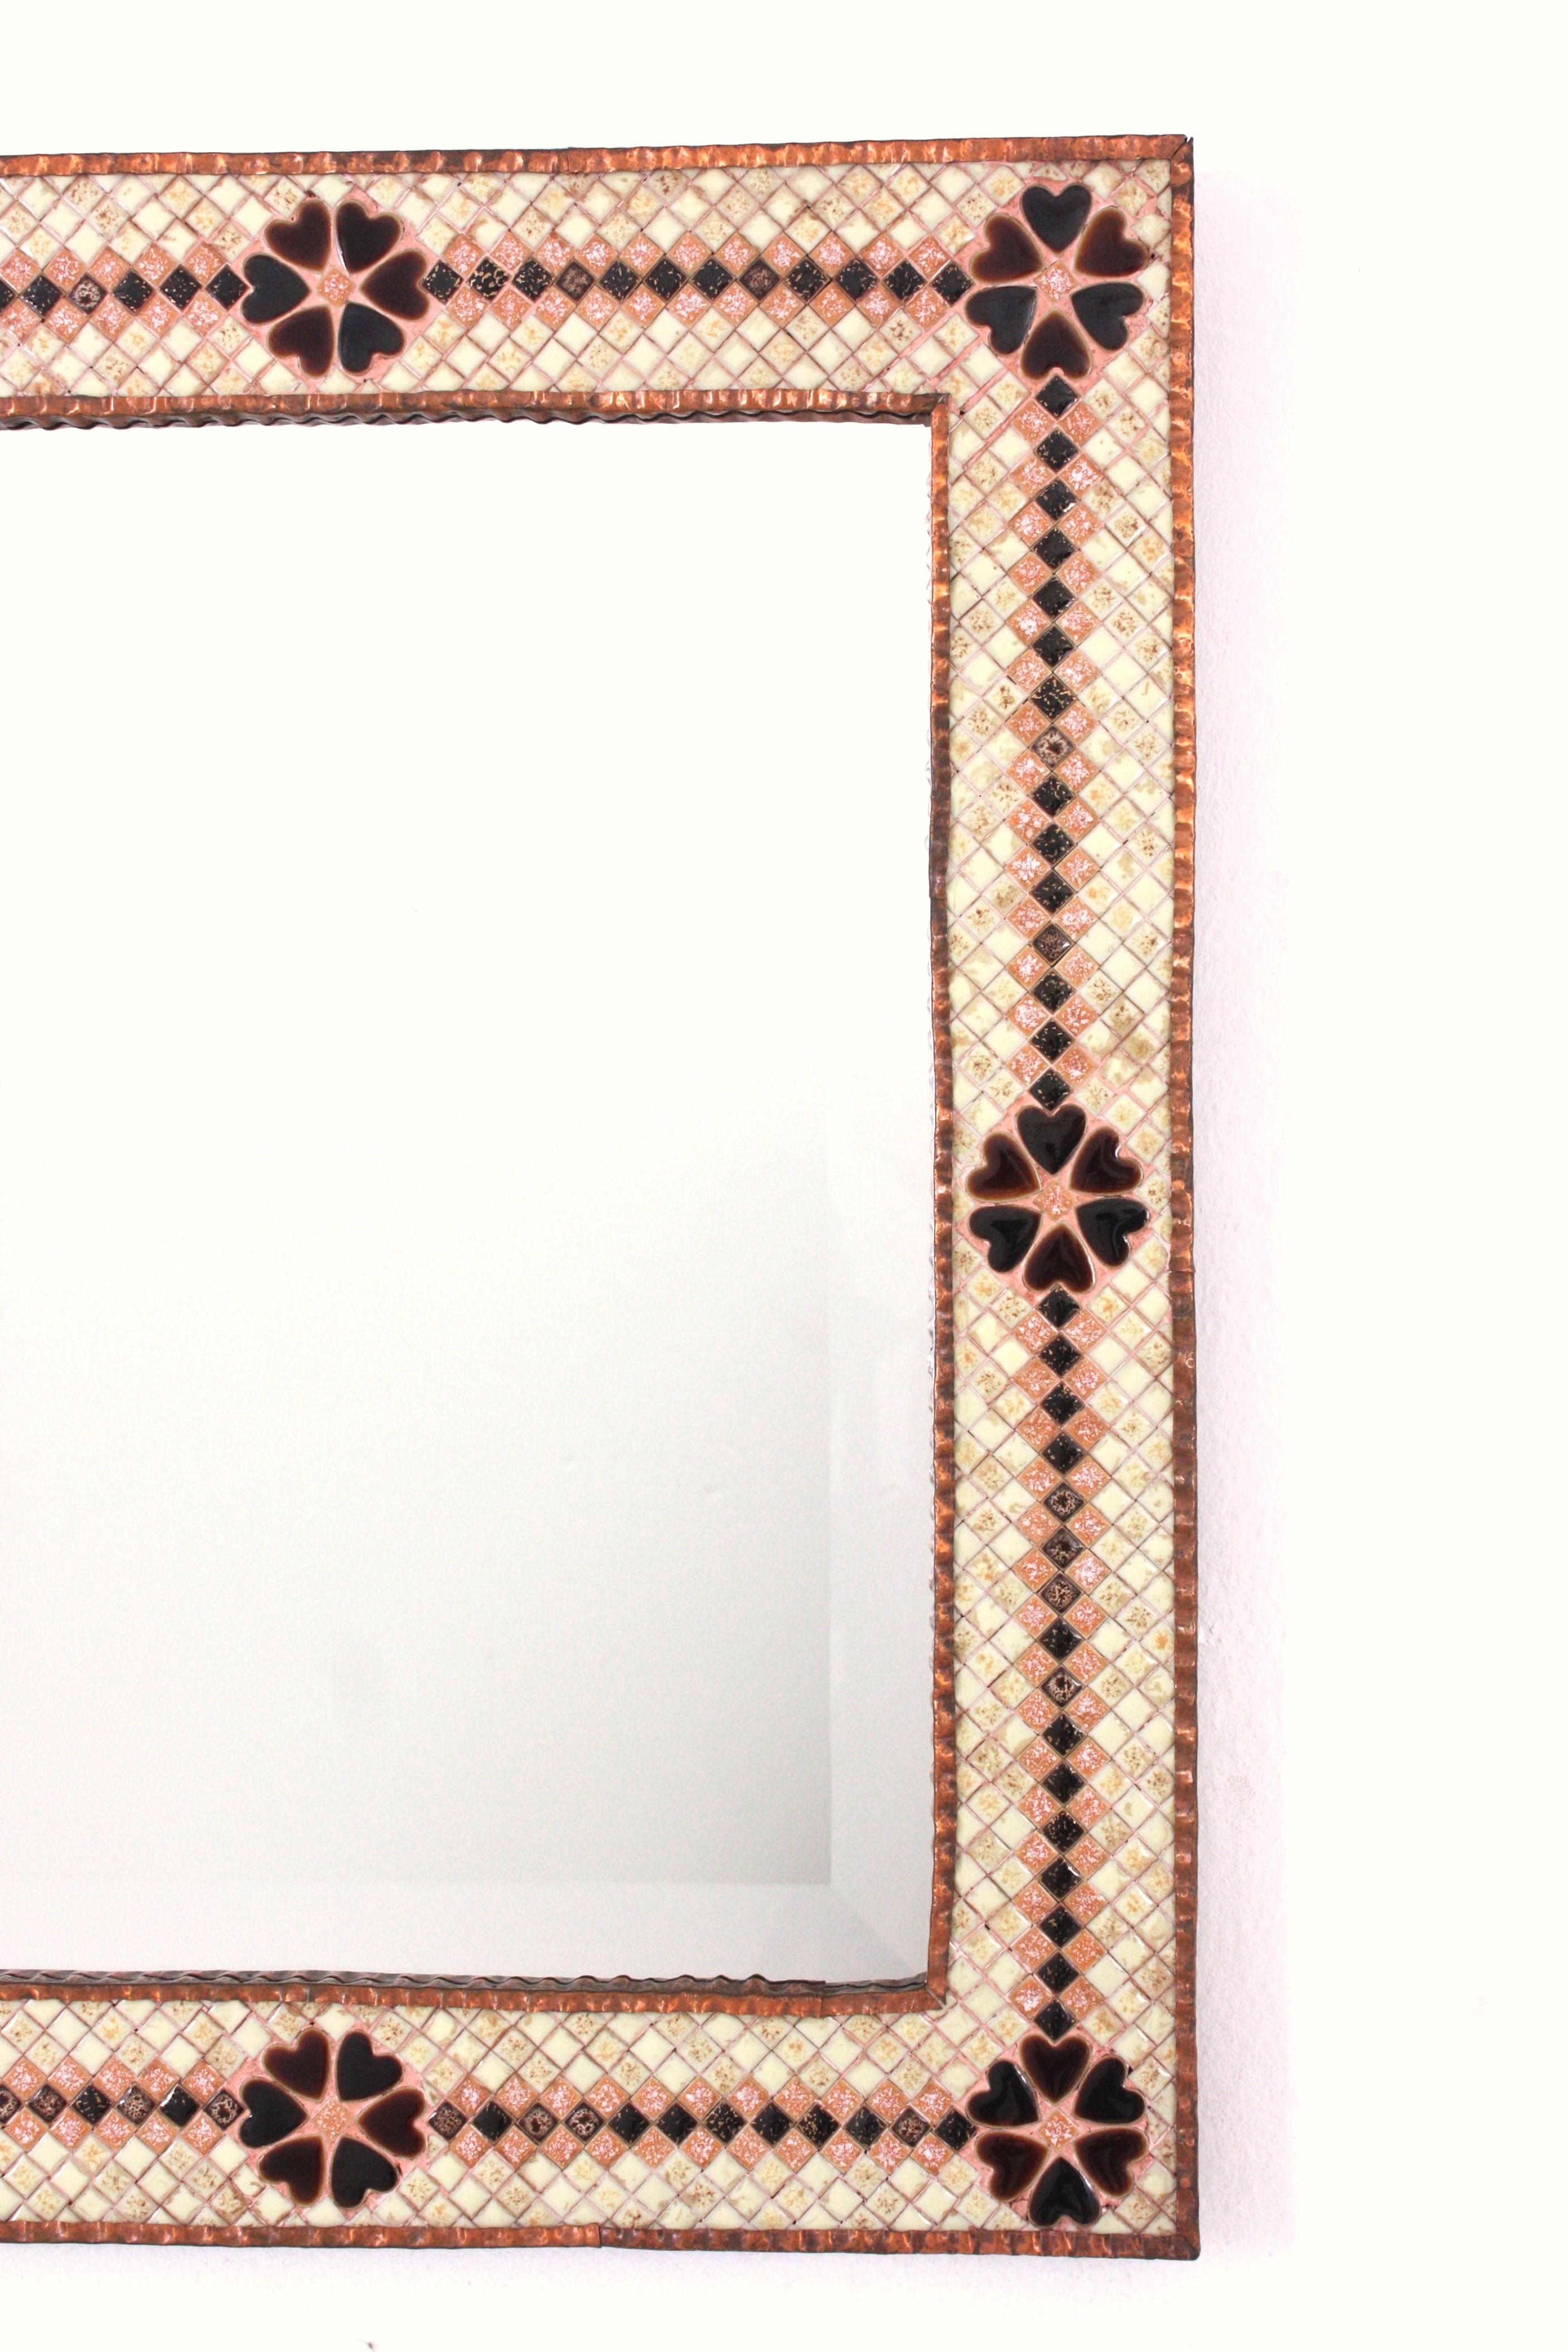 Spanish Tile Mosaic Rectangular Mirror in Glazed Ceramic, 1950s For Sale 6